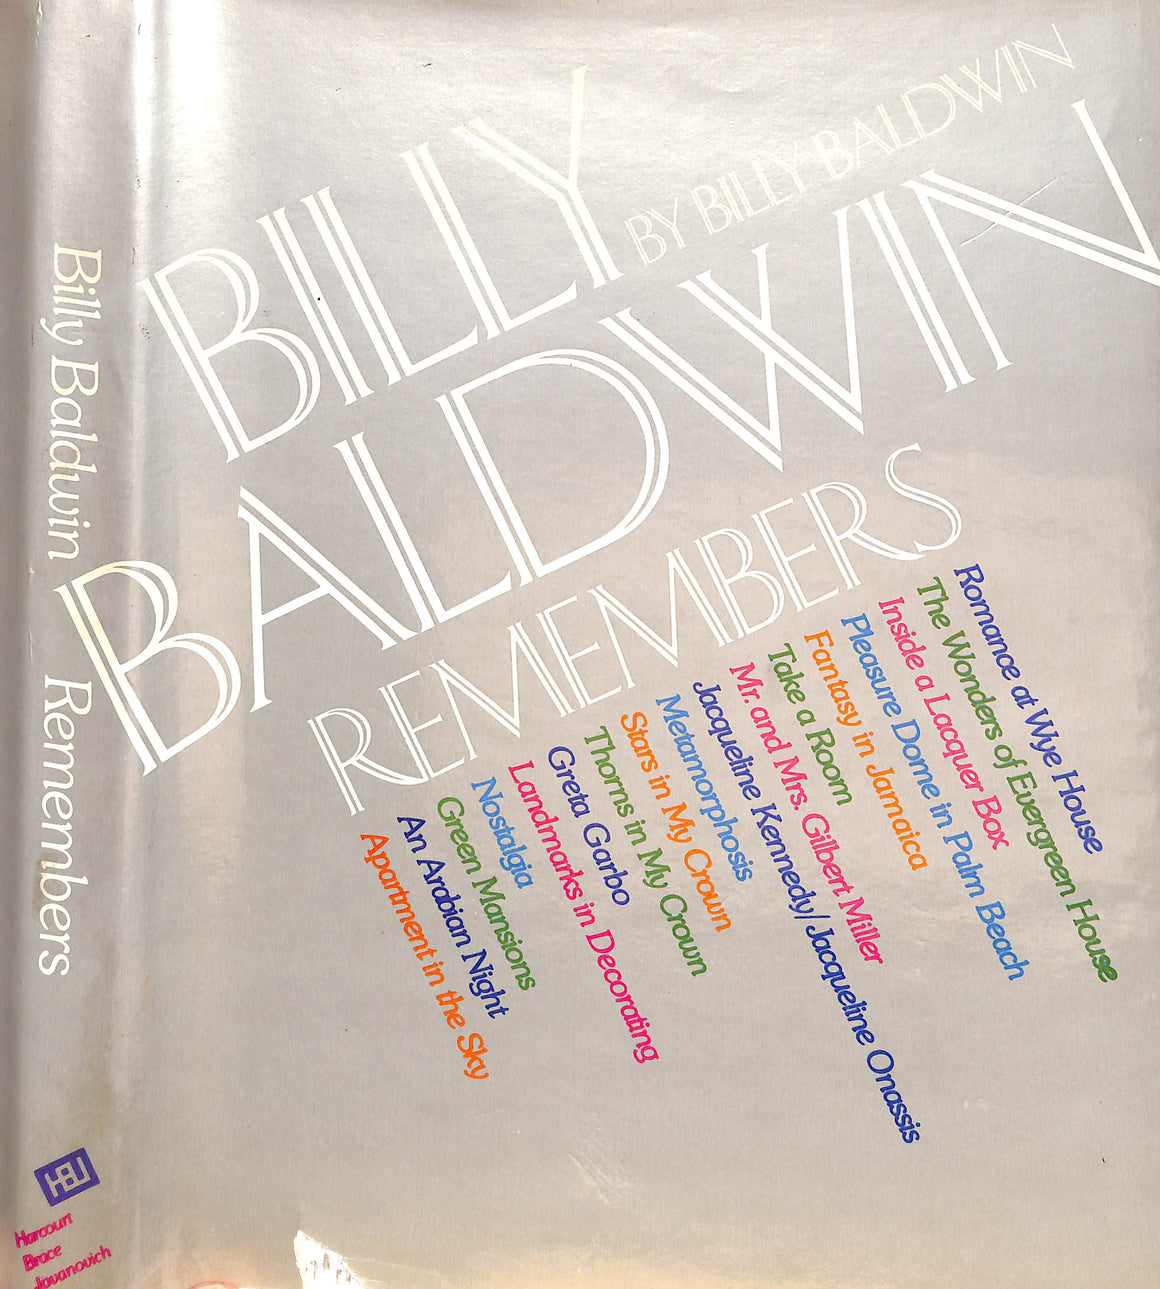 "Billy Baldwin Remembers" 1974 BALDWIN, Billy (SOLD)